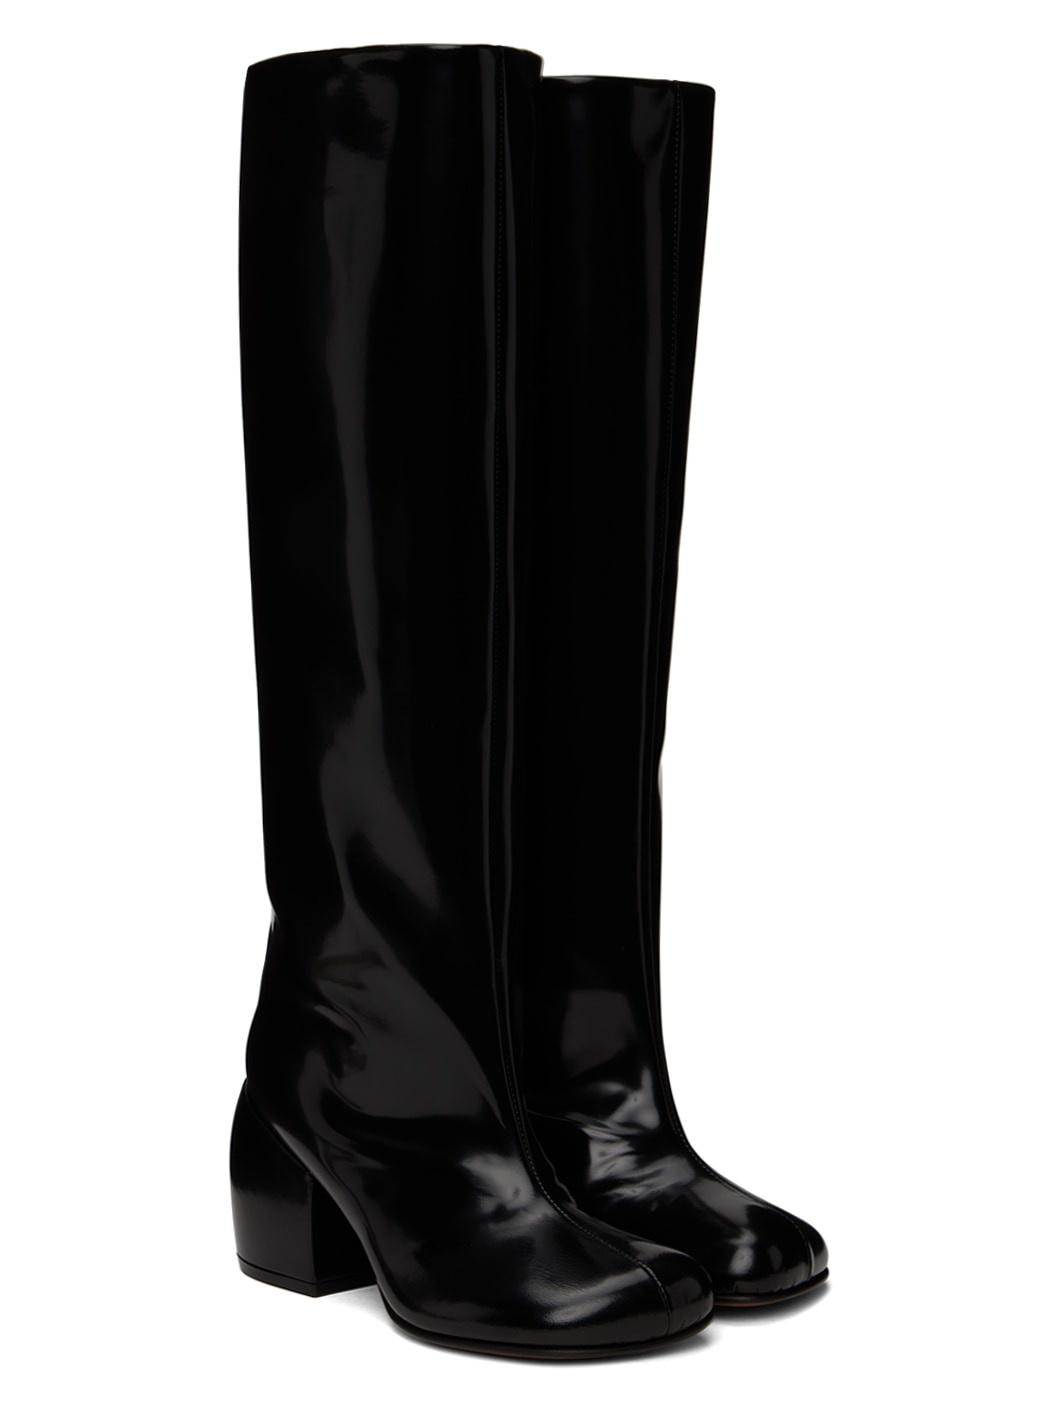 Black Polished Tall Boots - 4